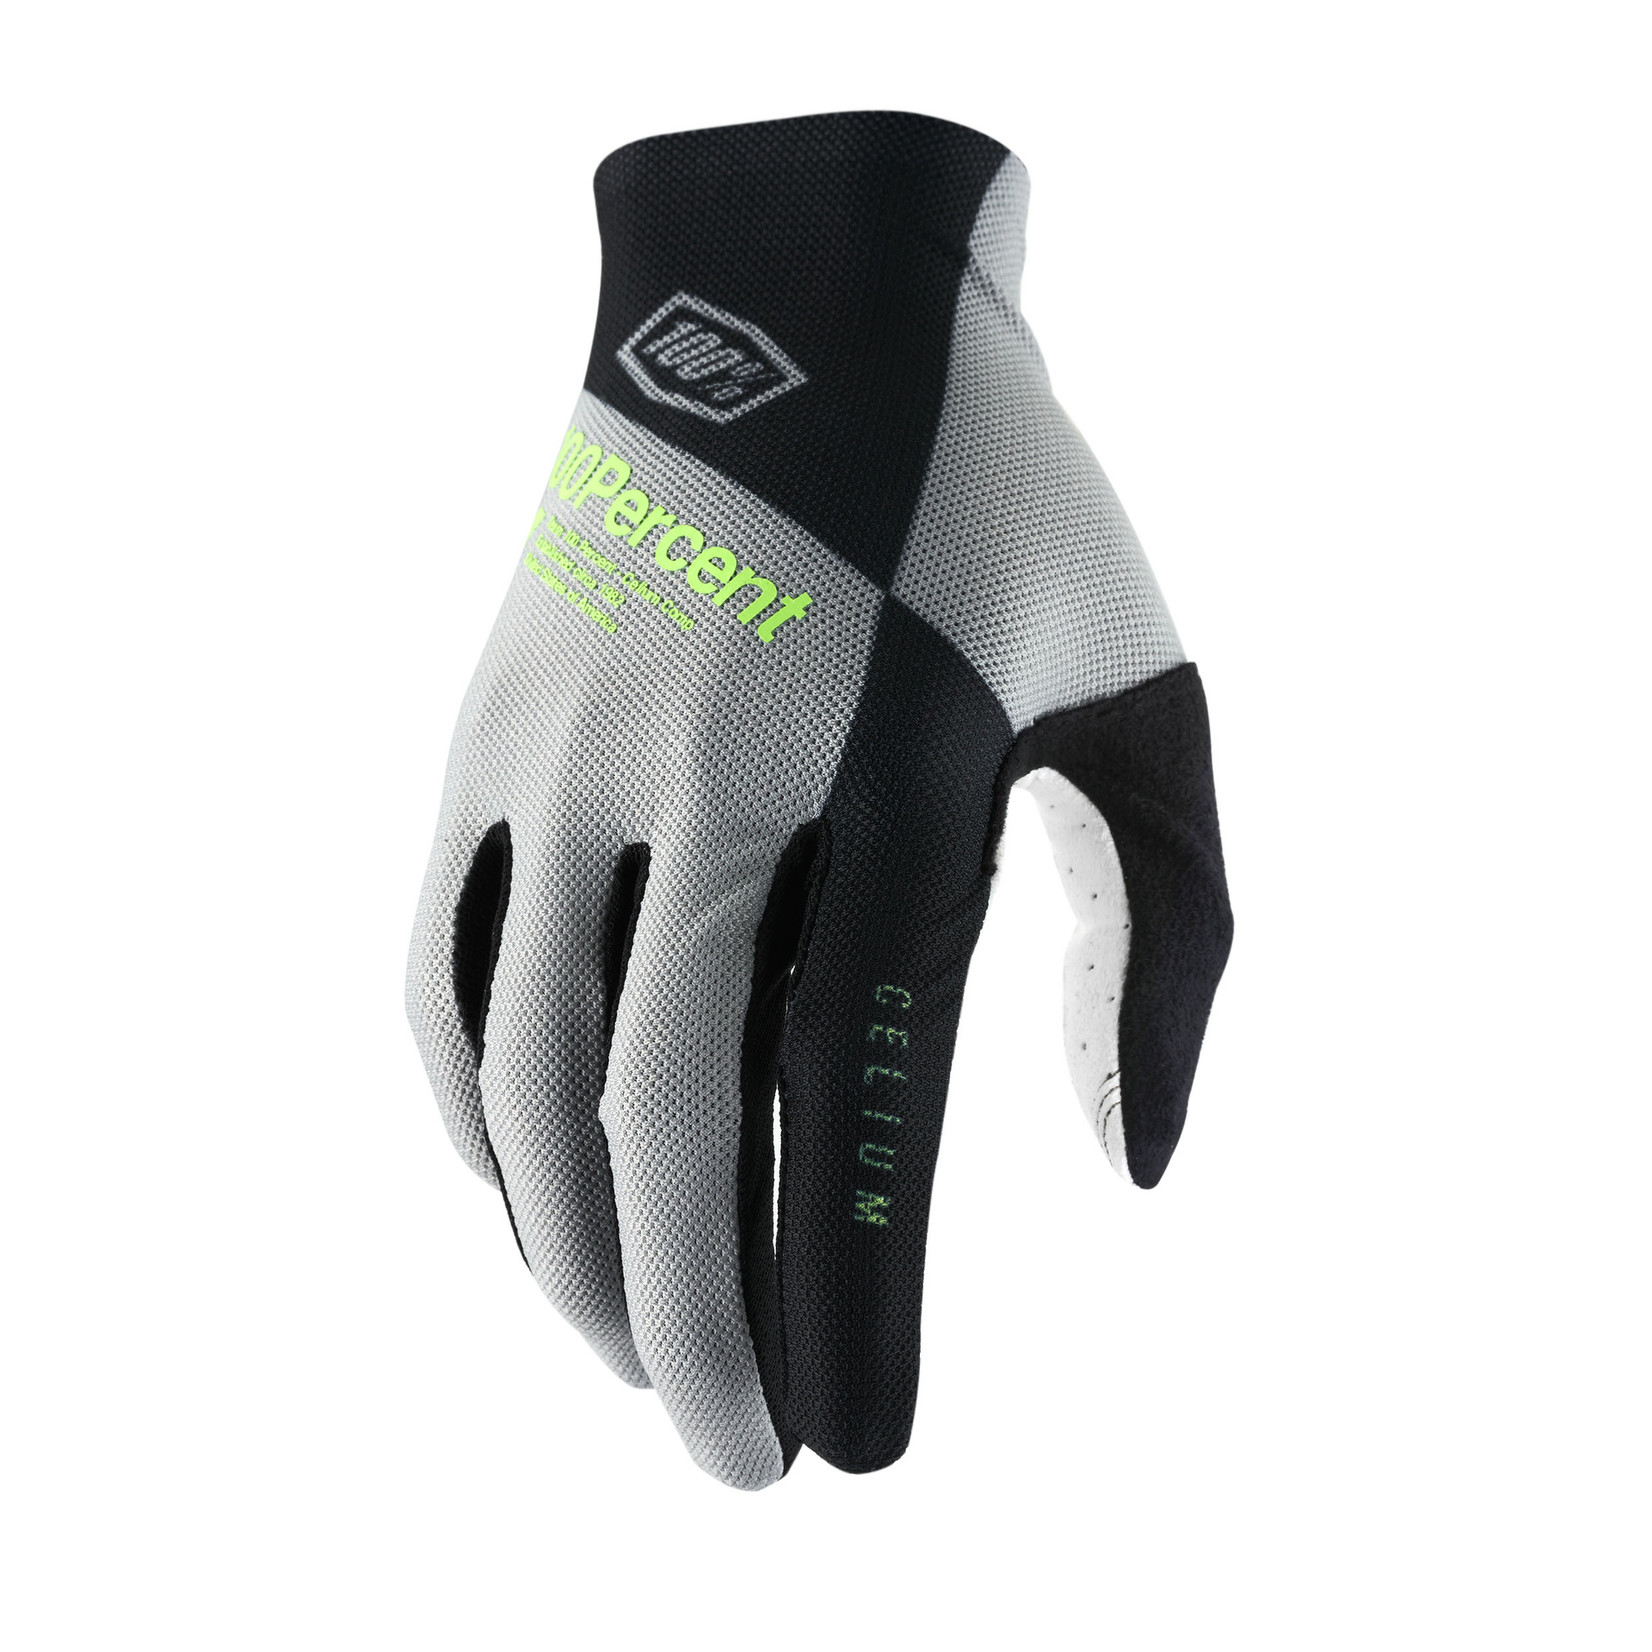 FE sports 100% CELIUM Cycling Gloves - Vapor/Lime